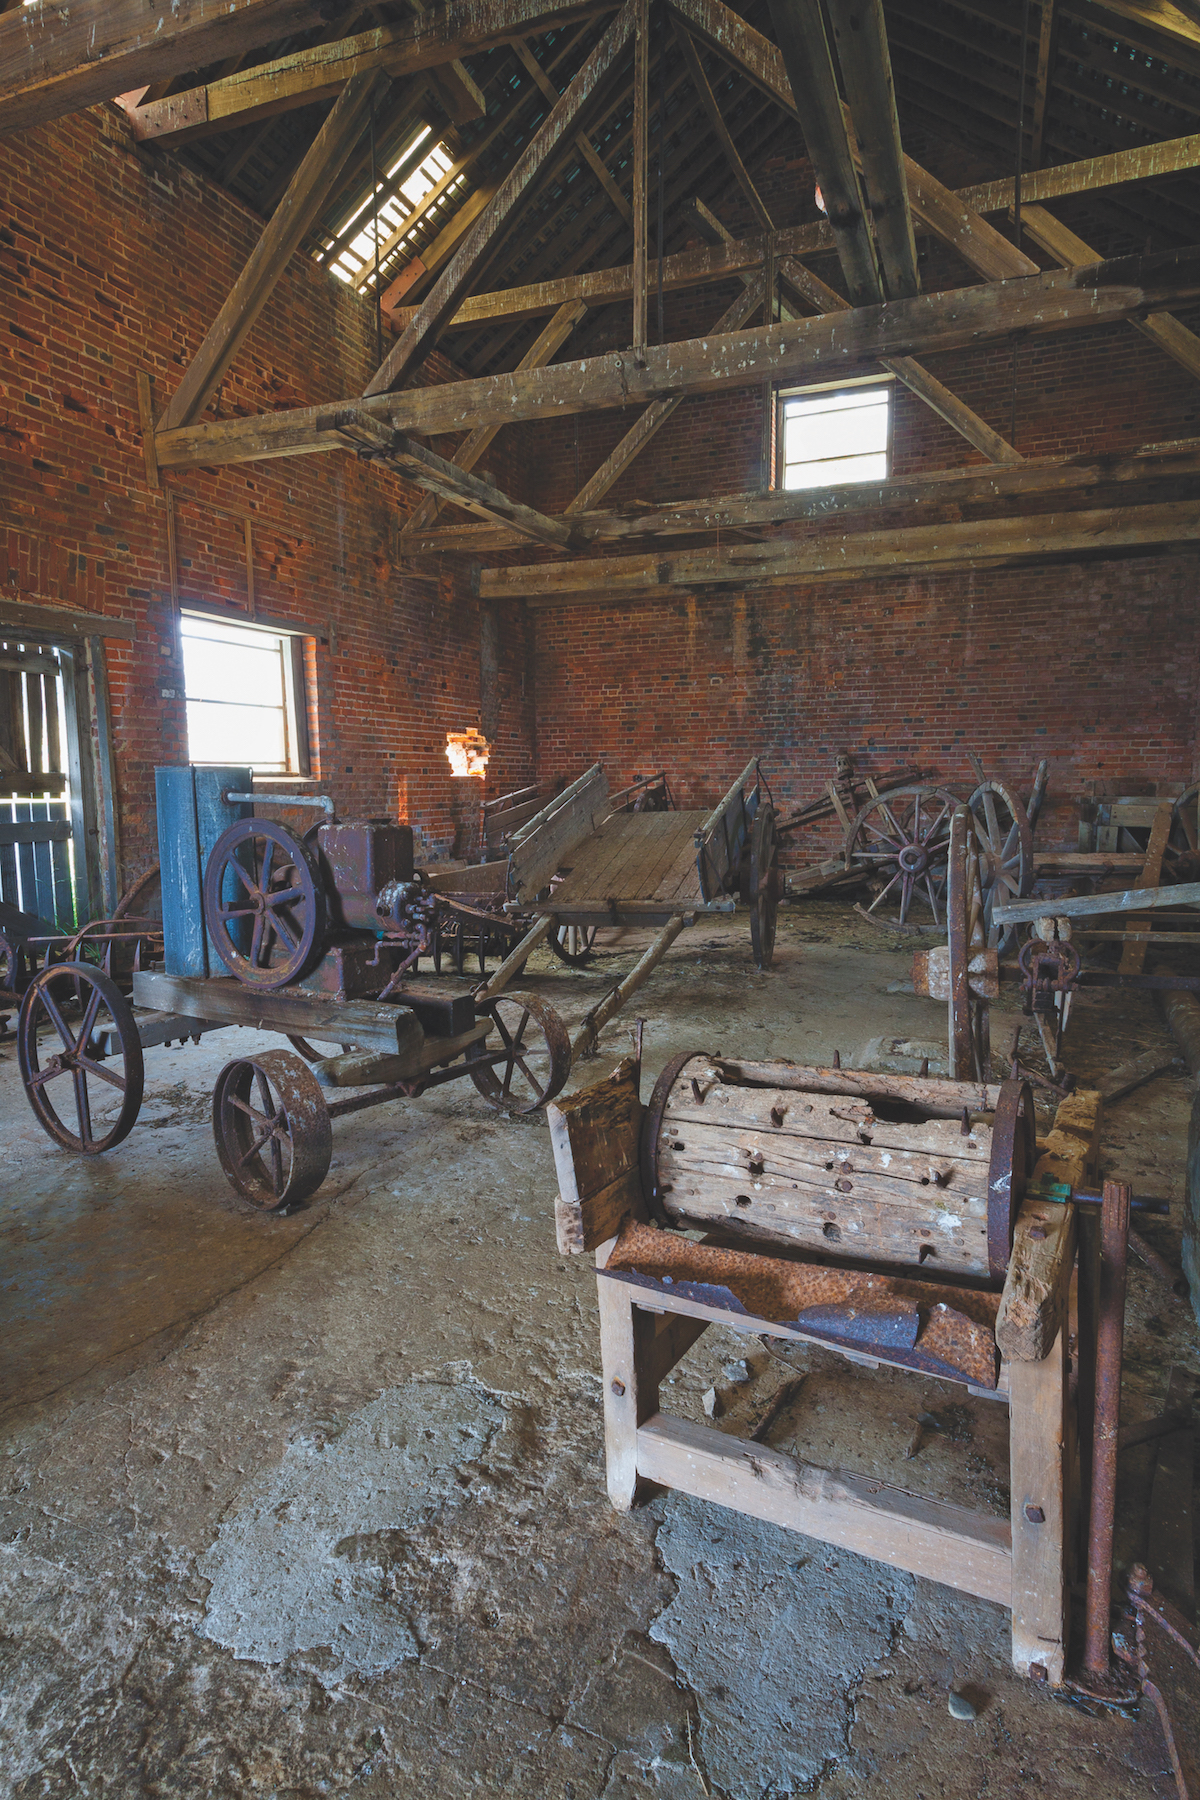 Interior of a convict barn on the island